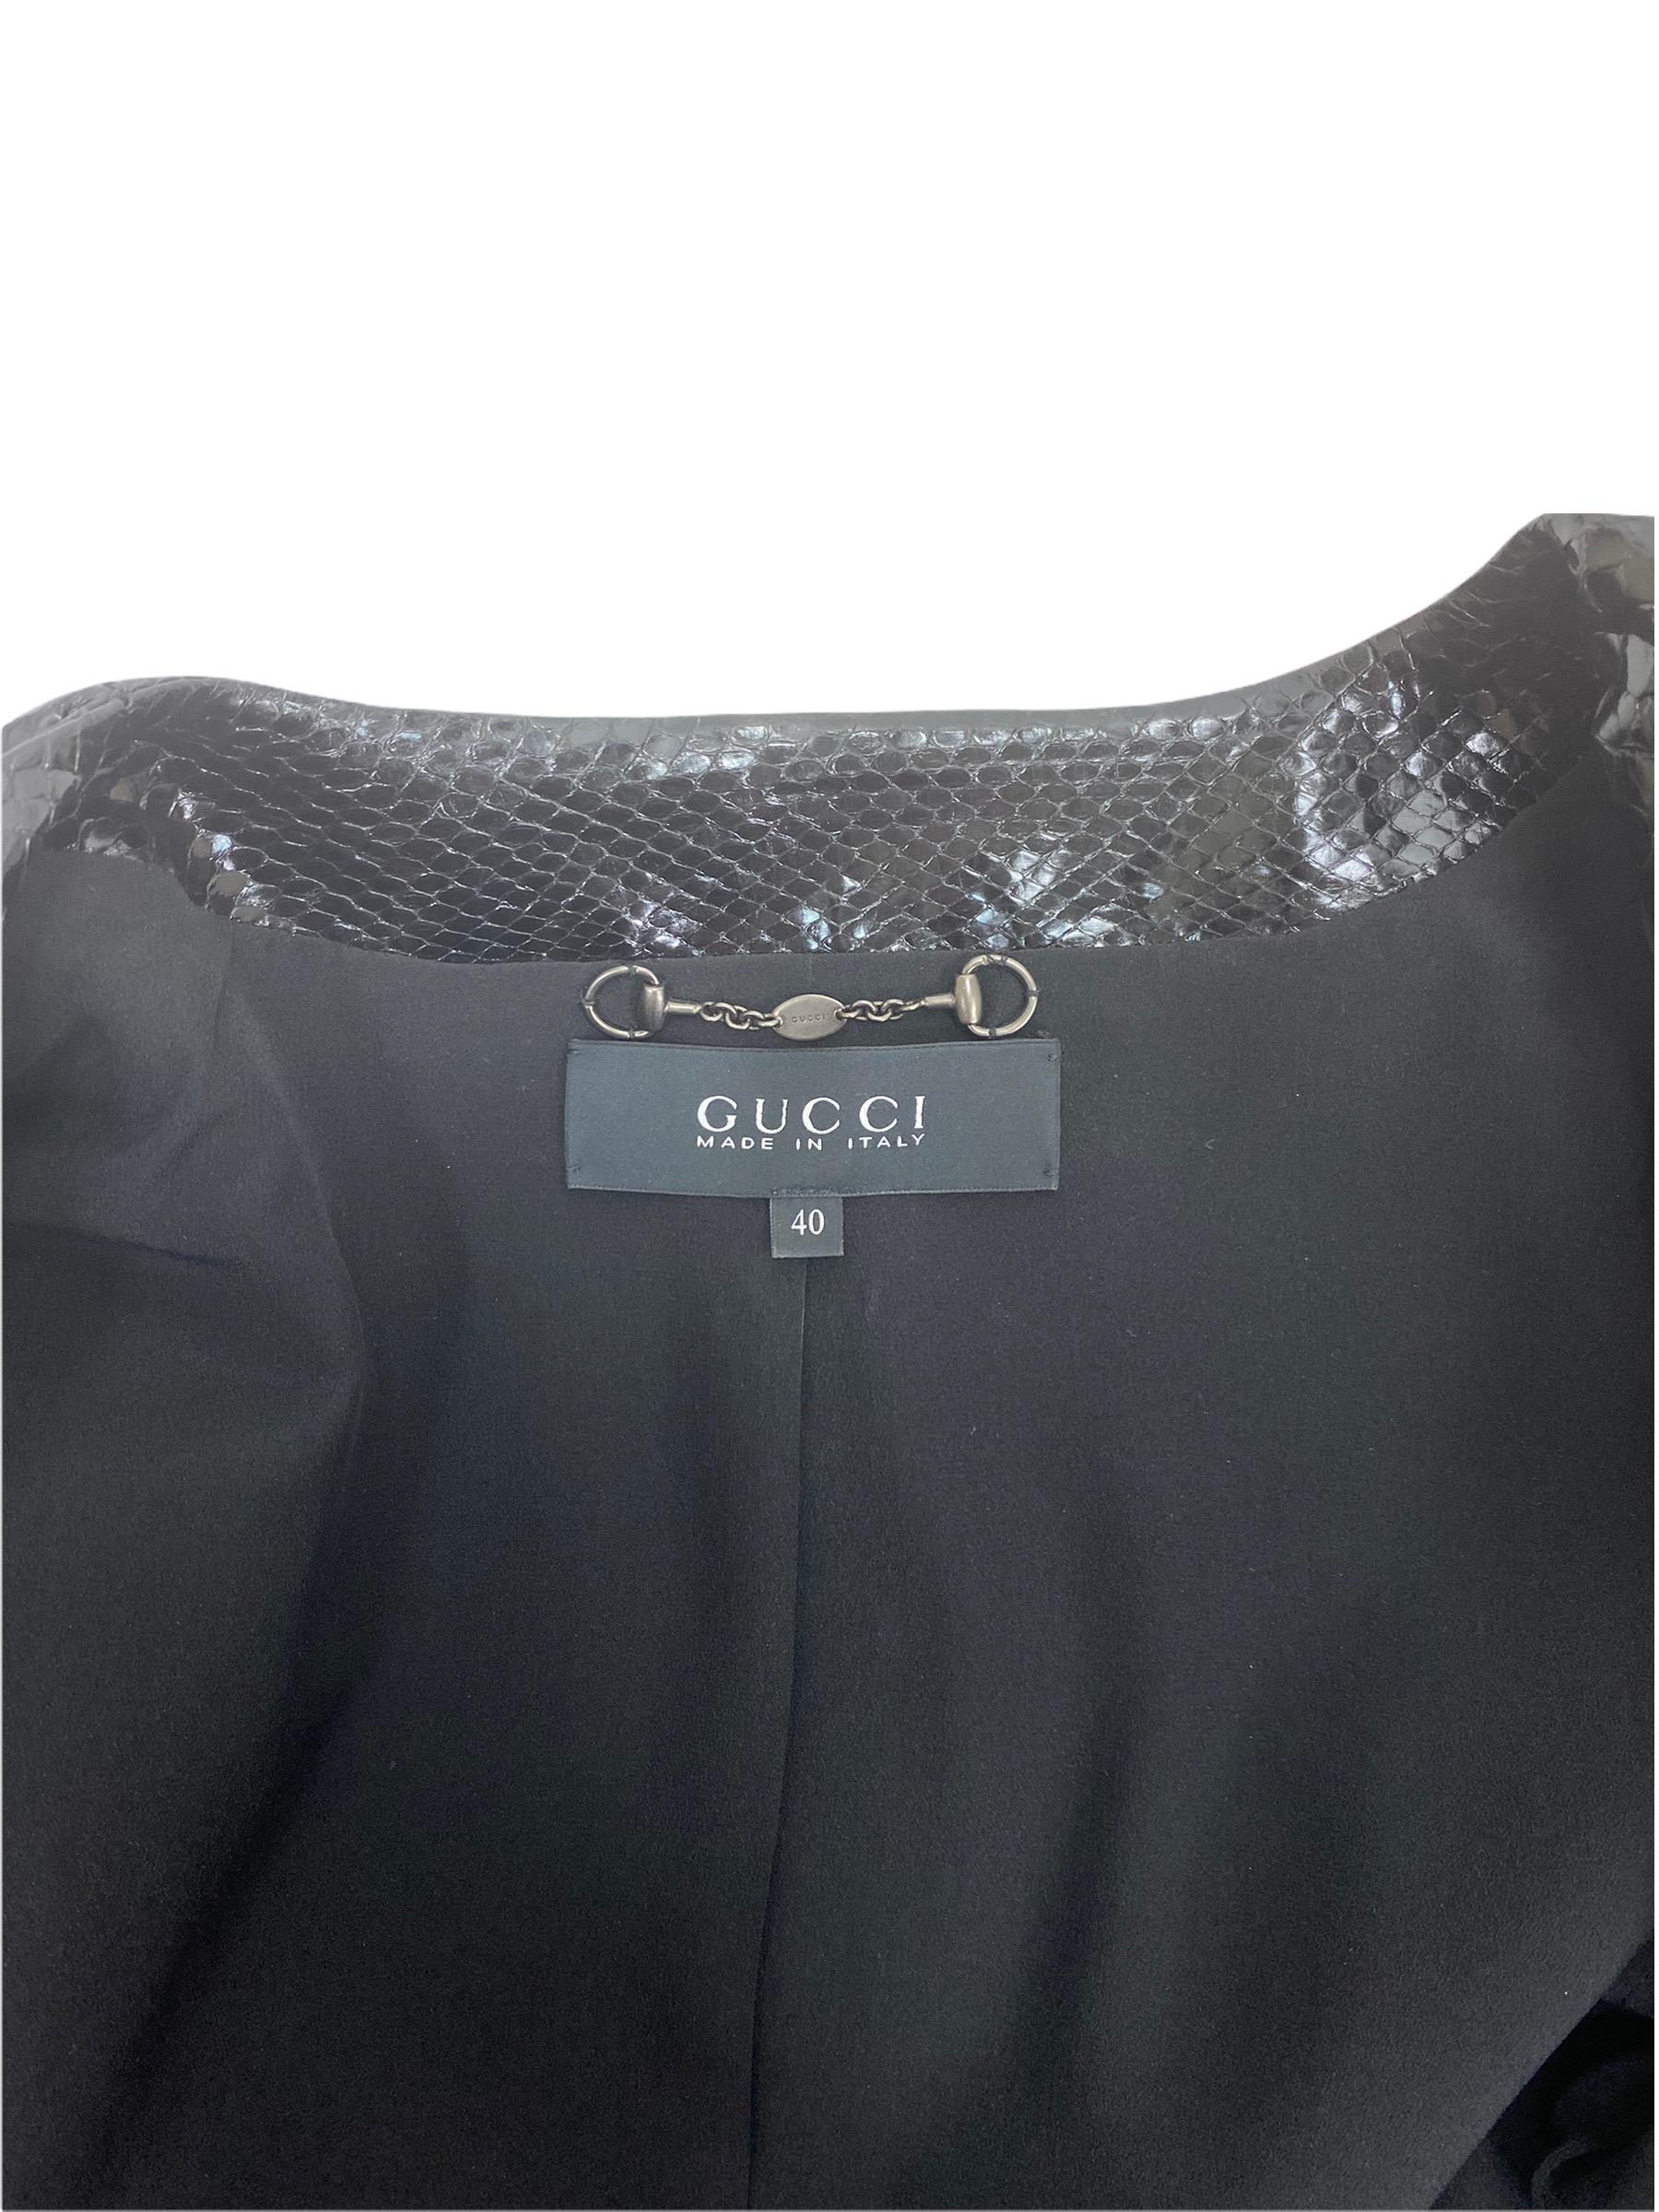 S/S 2007 Vintage Gucci Black Python Leather Jacket For Sale 3